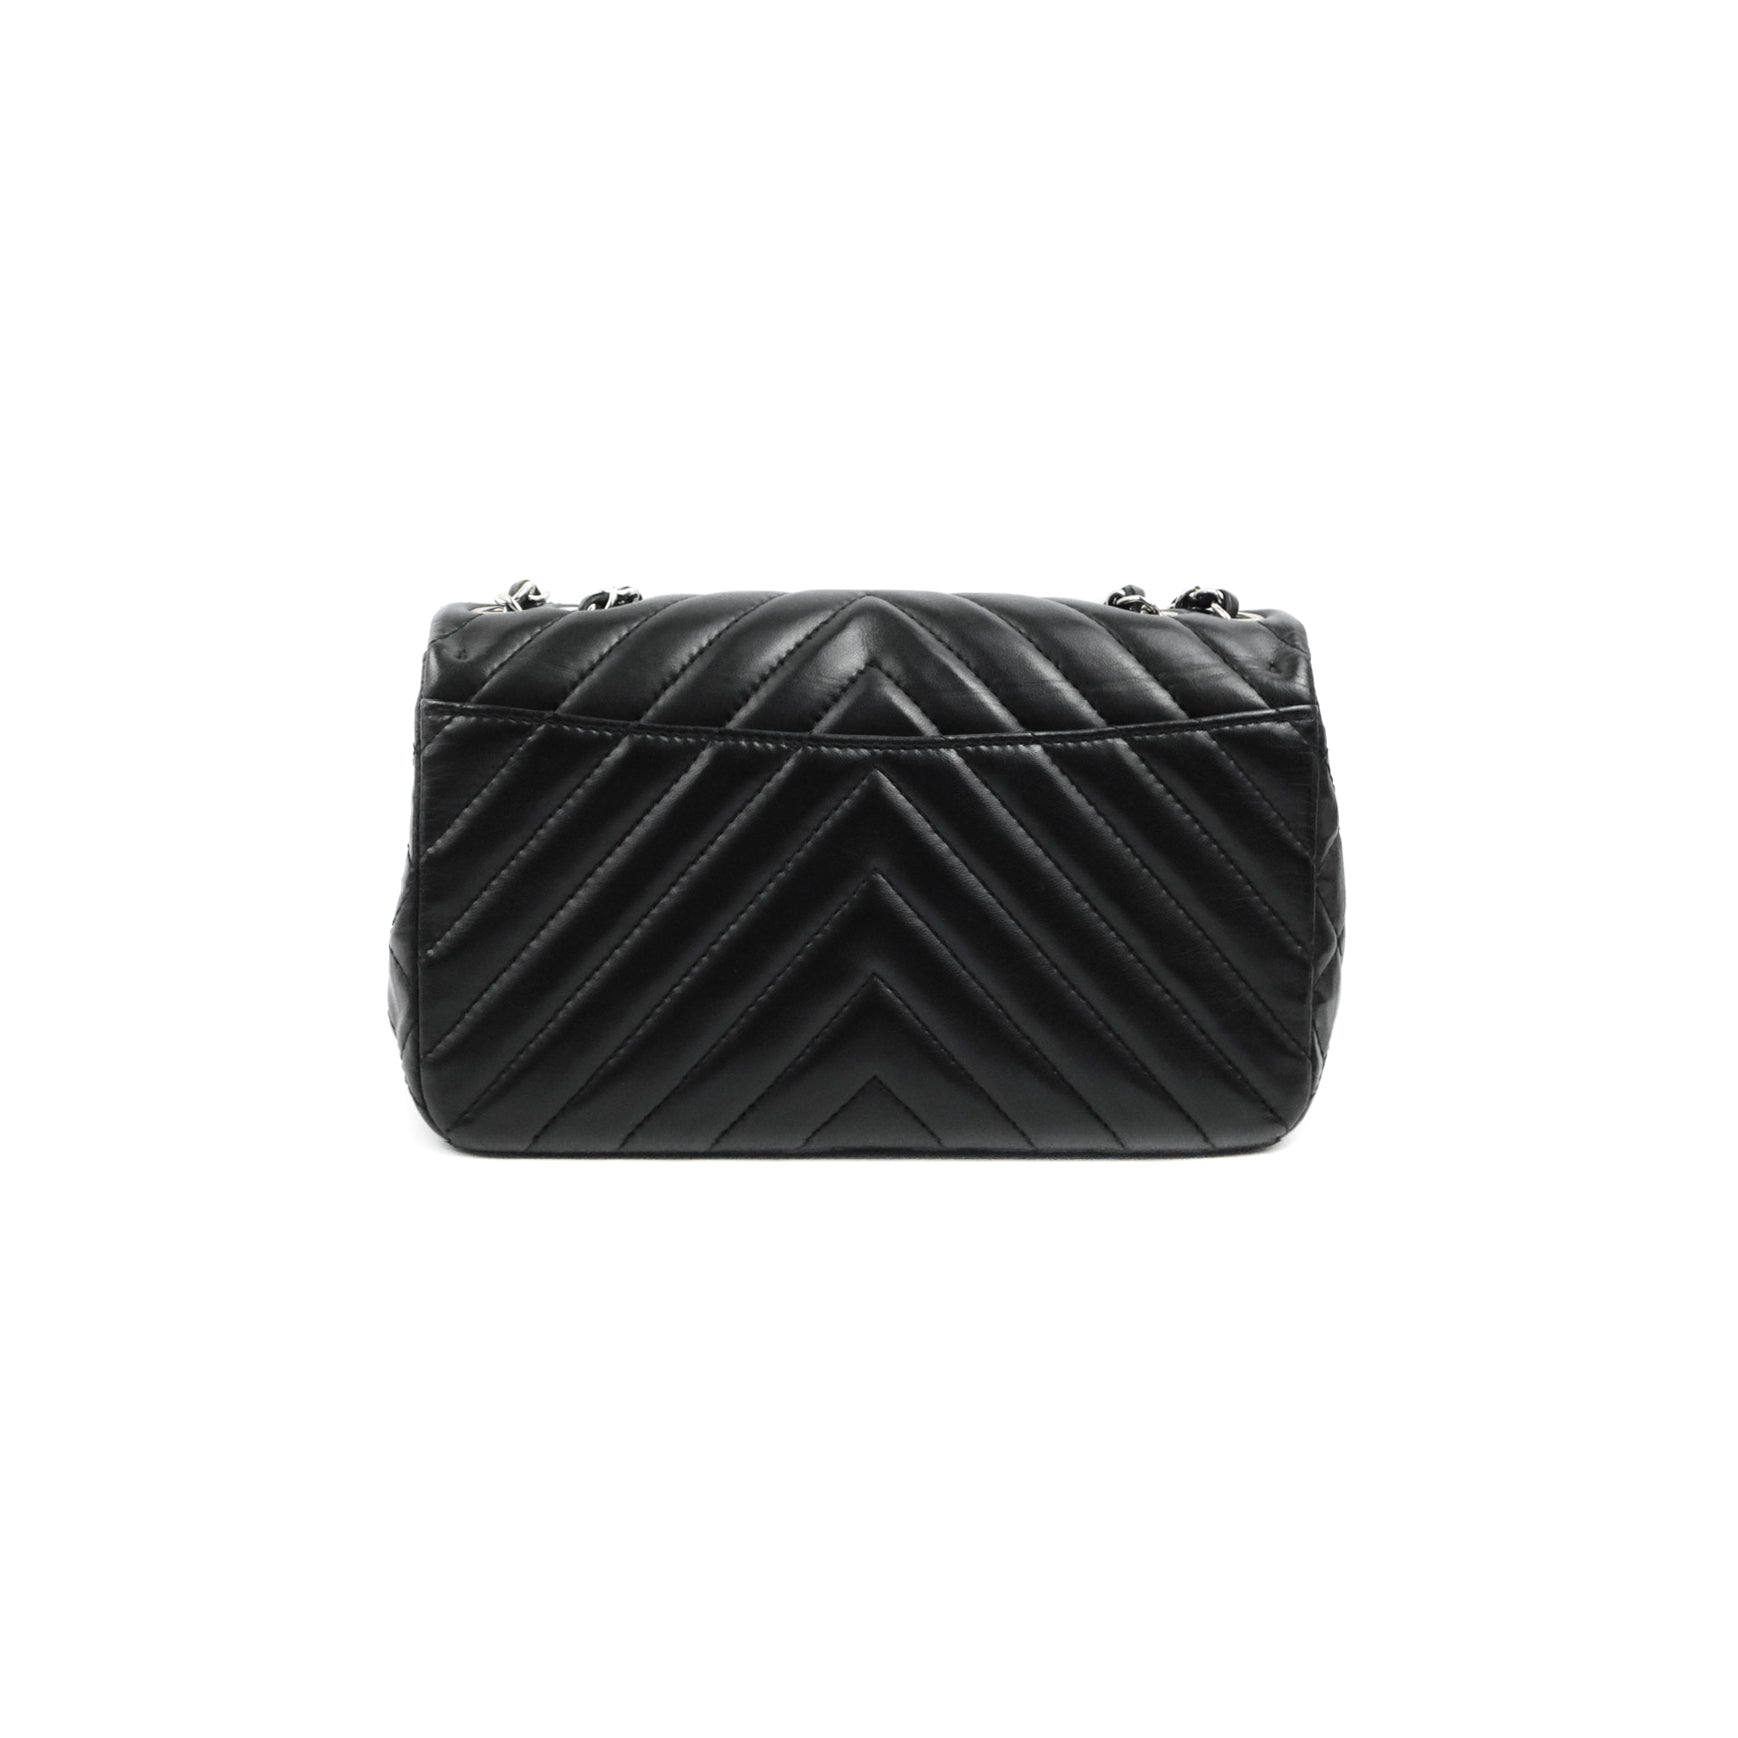 Black Chanel Oval Top Handle Bag